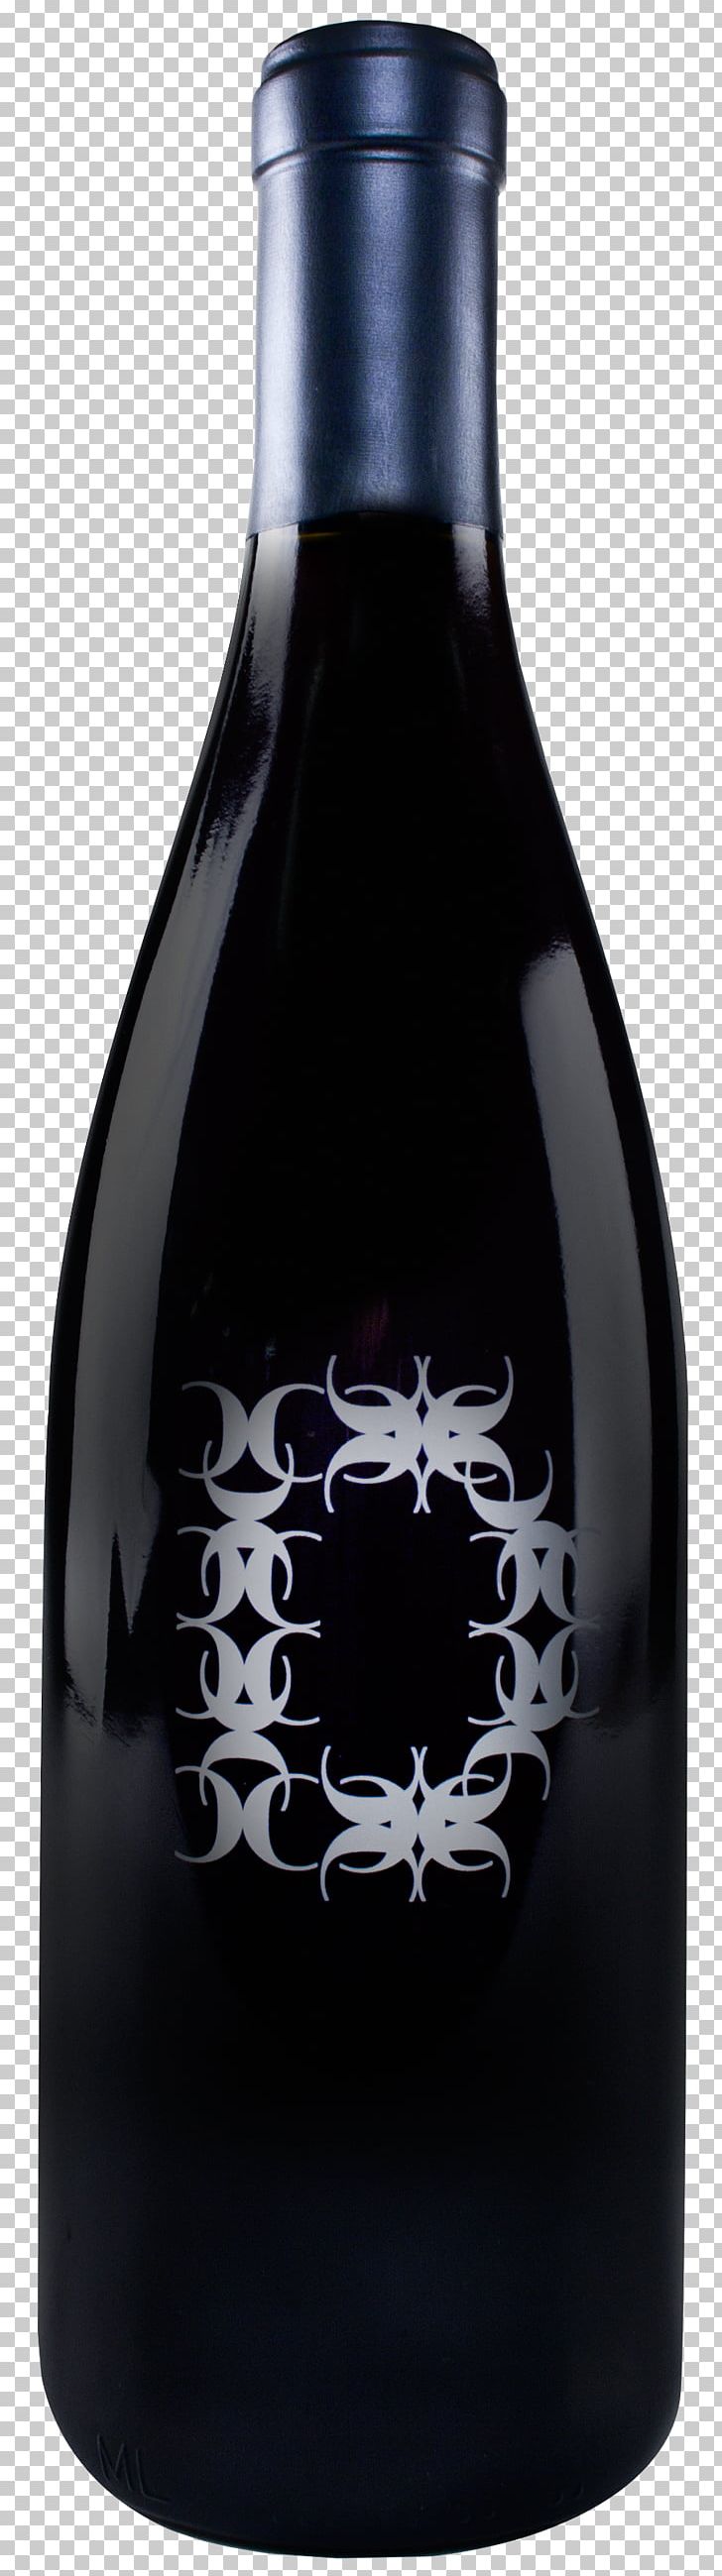 C Donatiello Winery Glass Bottle Russian River White Wine PNG, Clipart, Barware, Bottle, California, C Donatiello Winery, Chardonnay Free PNG Download